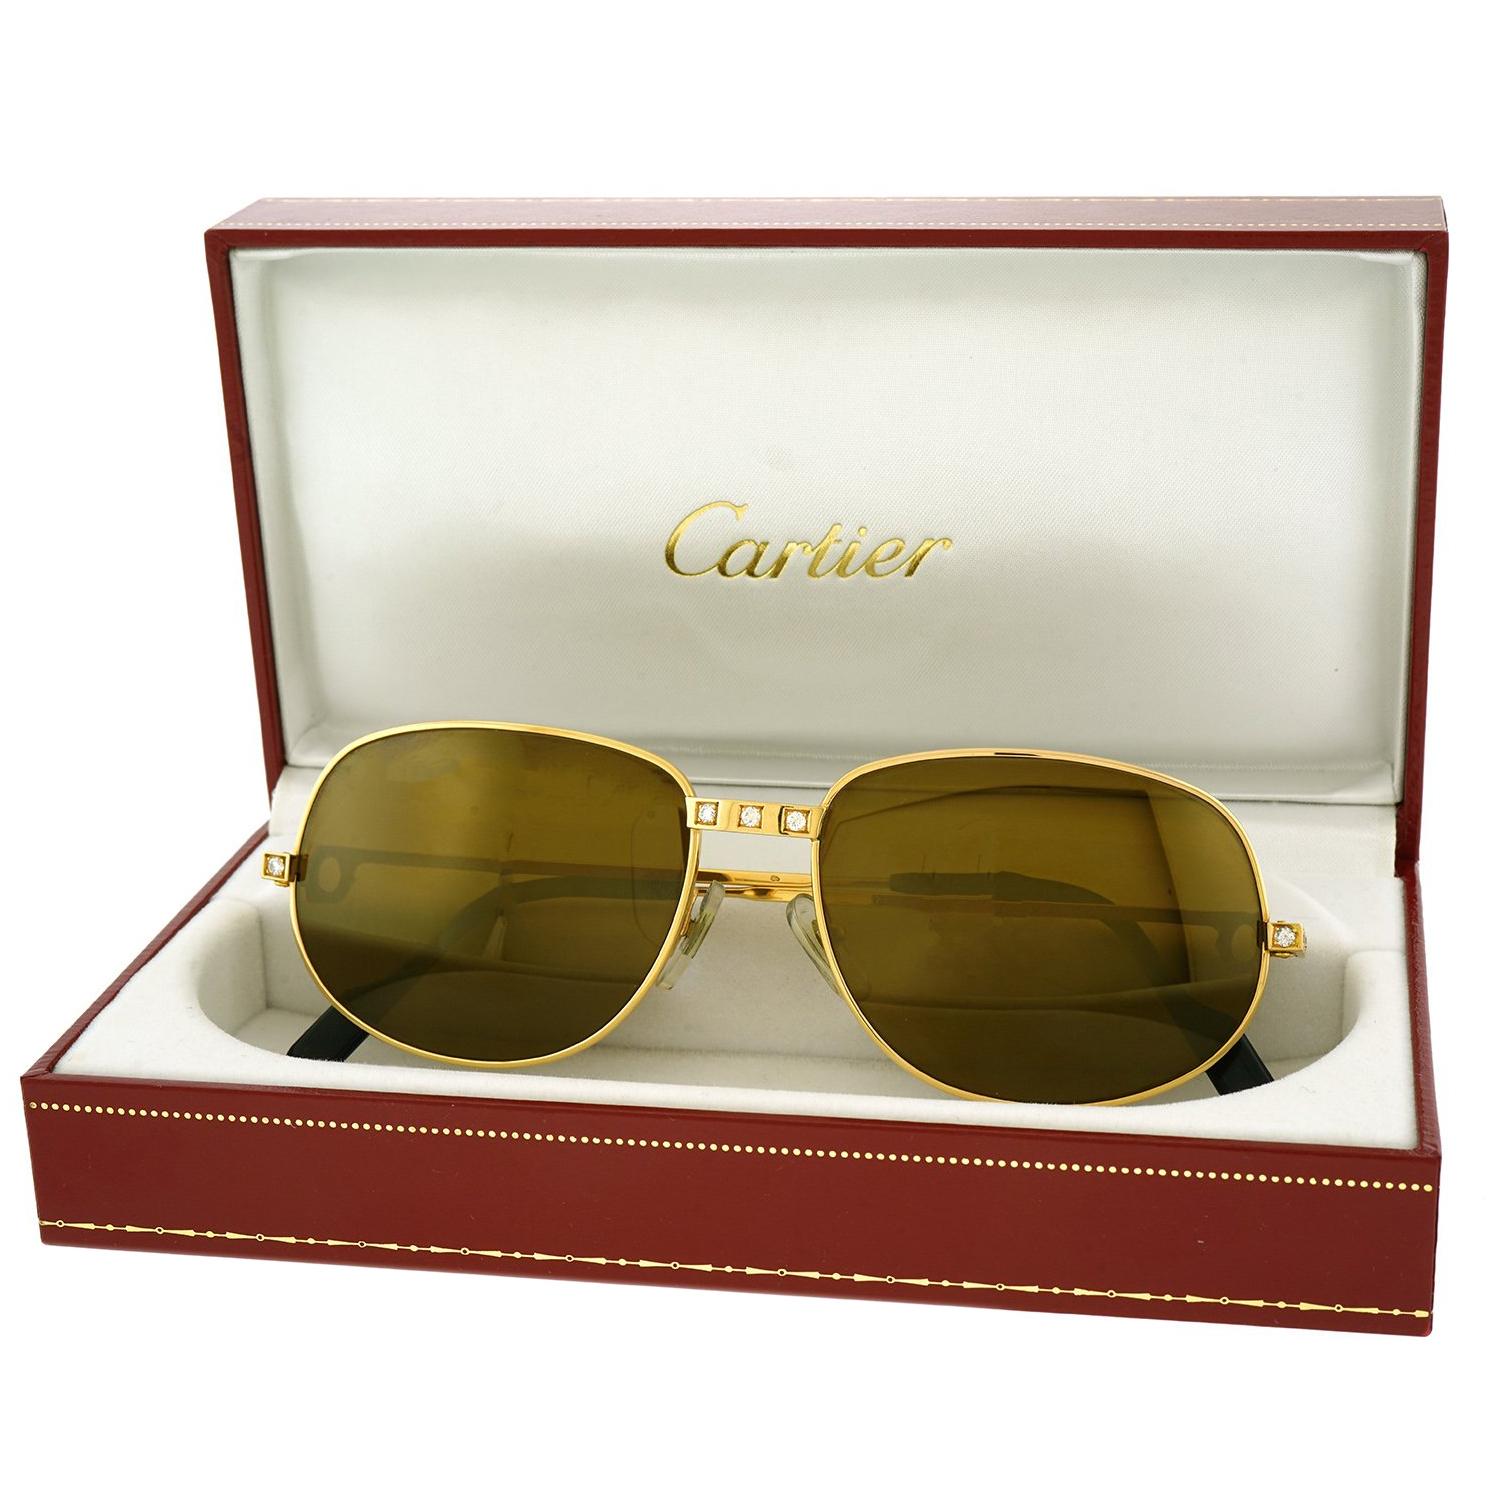 Cartier "Santos" Diamond Set 18k Gold Sunglasses